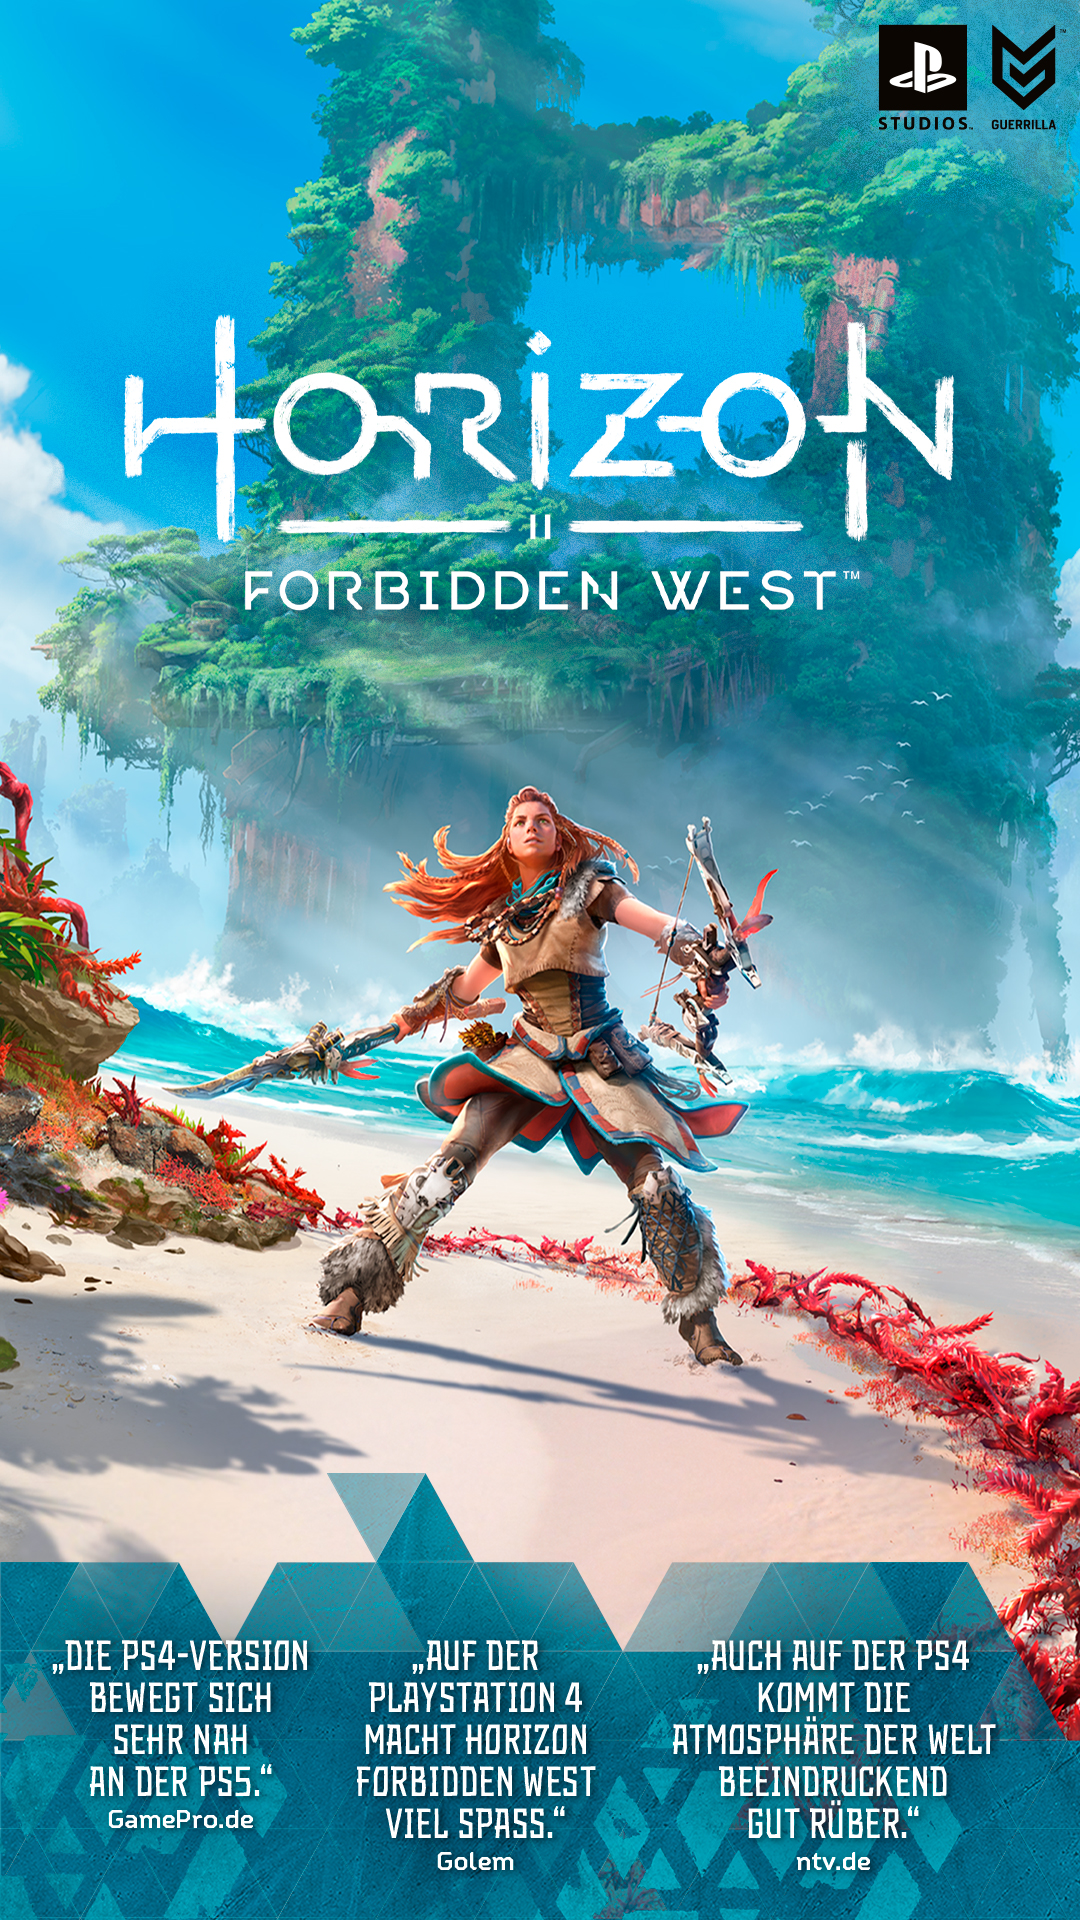 Forbidden West - [PlayStation 4] Horizon